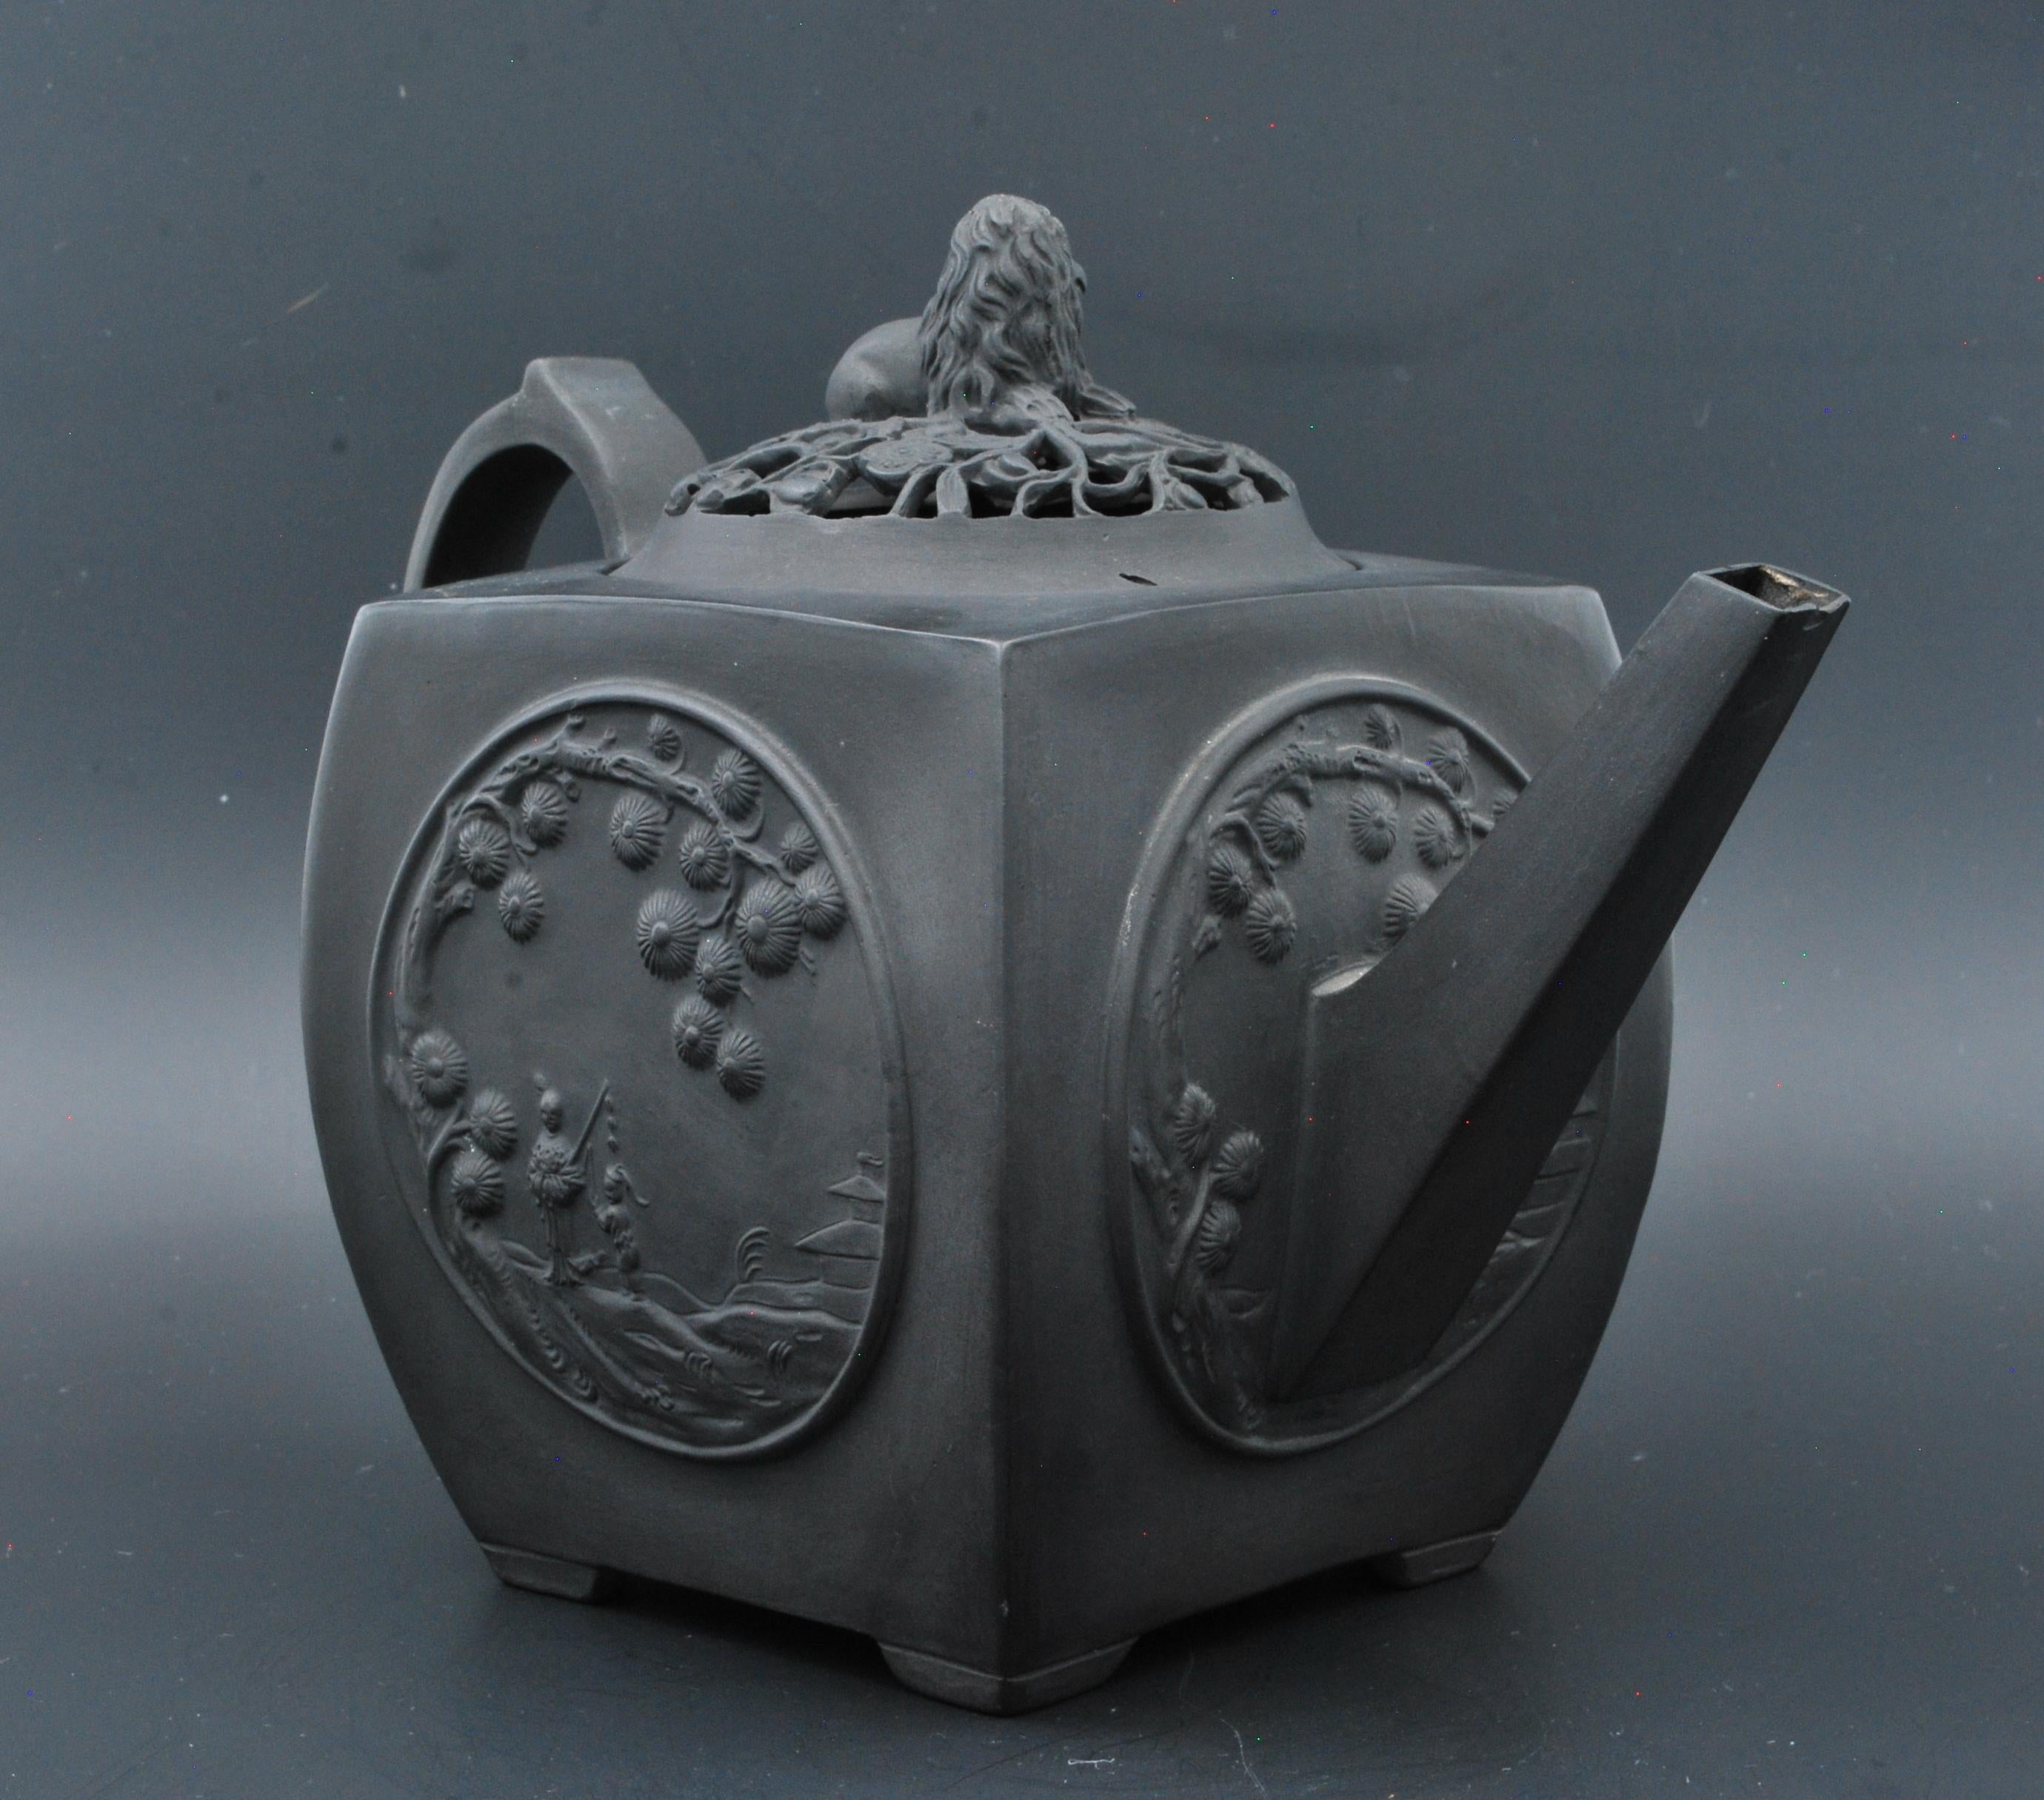 Molded Black Basalt Teapot with Pierced Lid, Turner, C1790